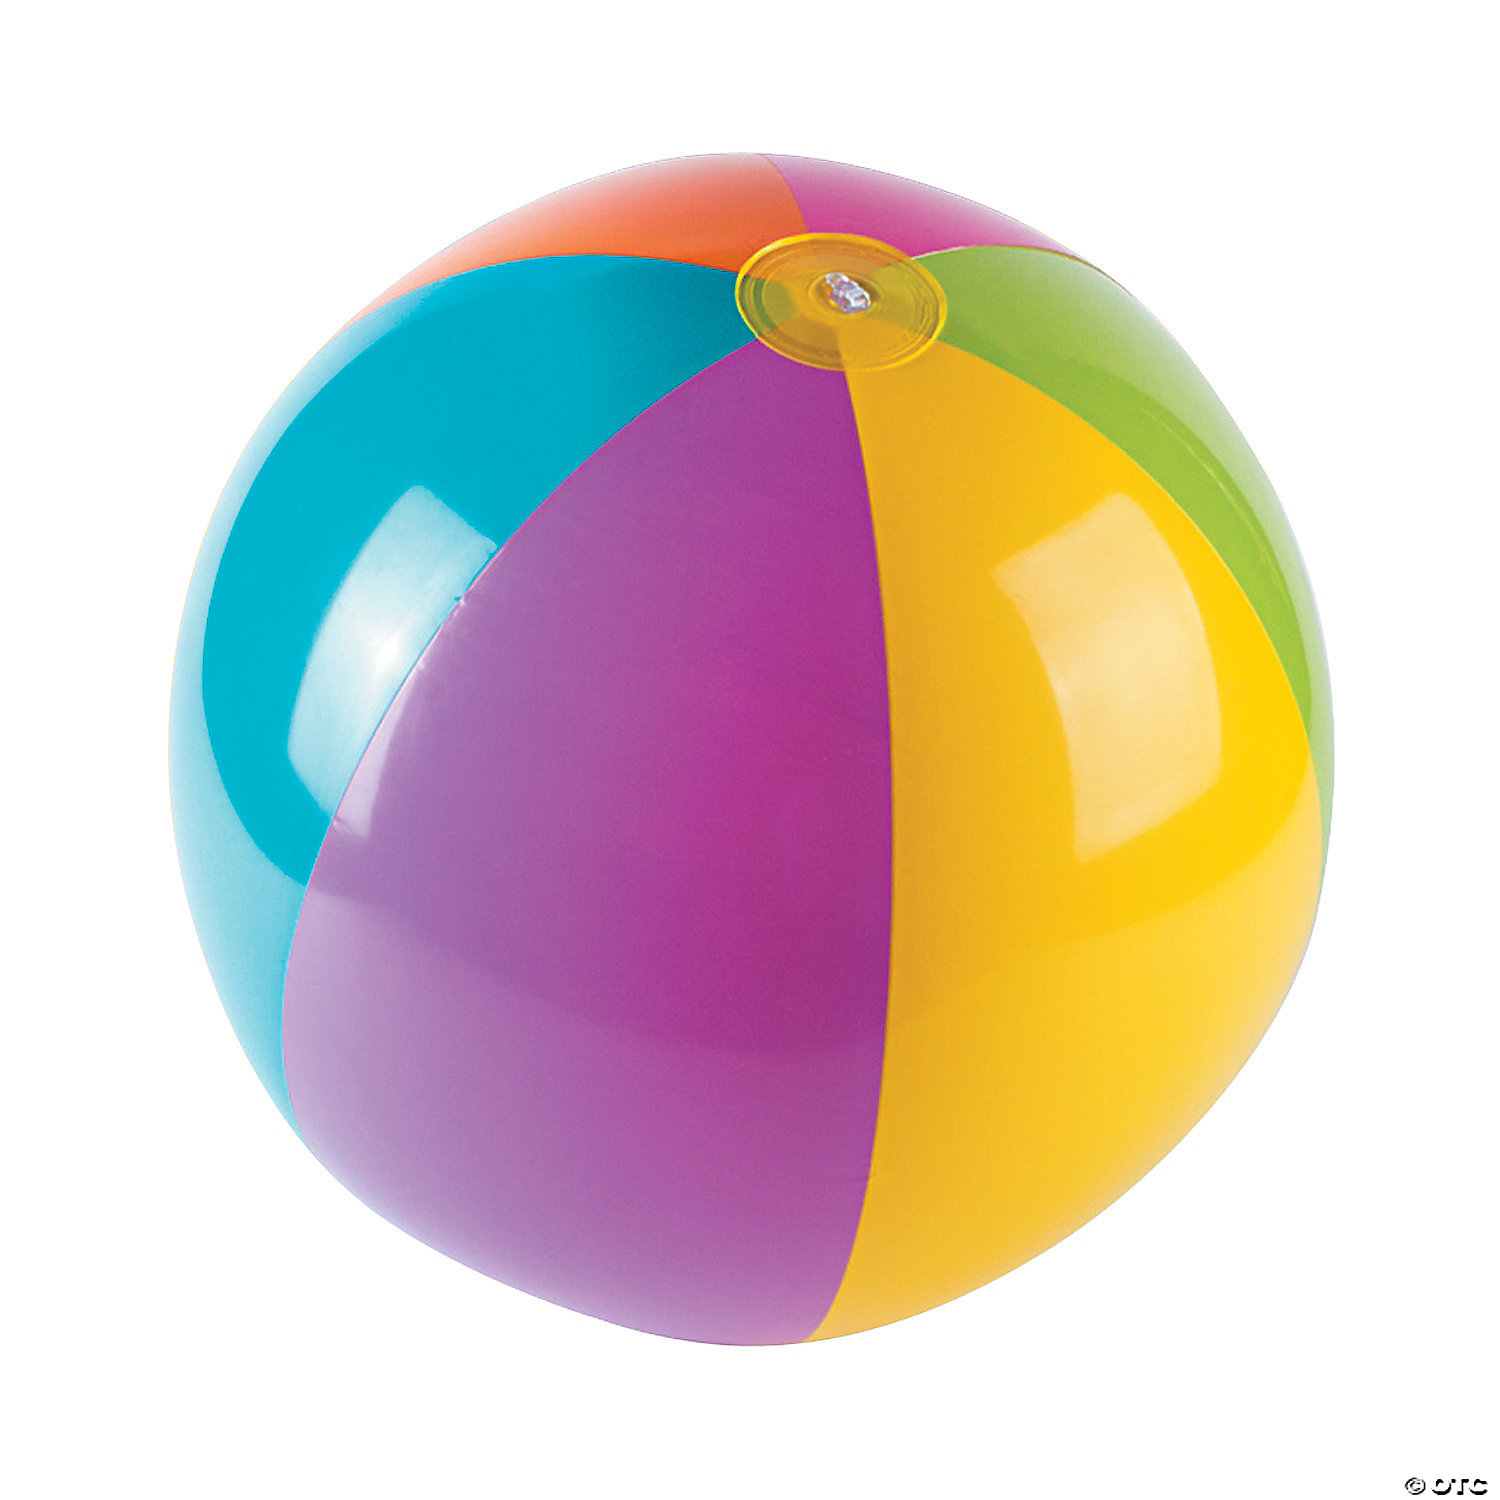 large ball